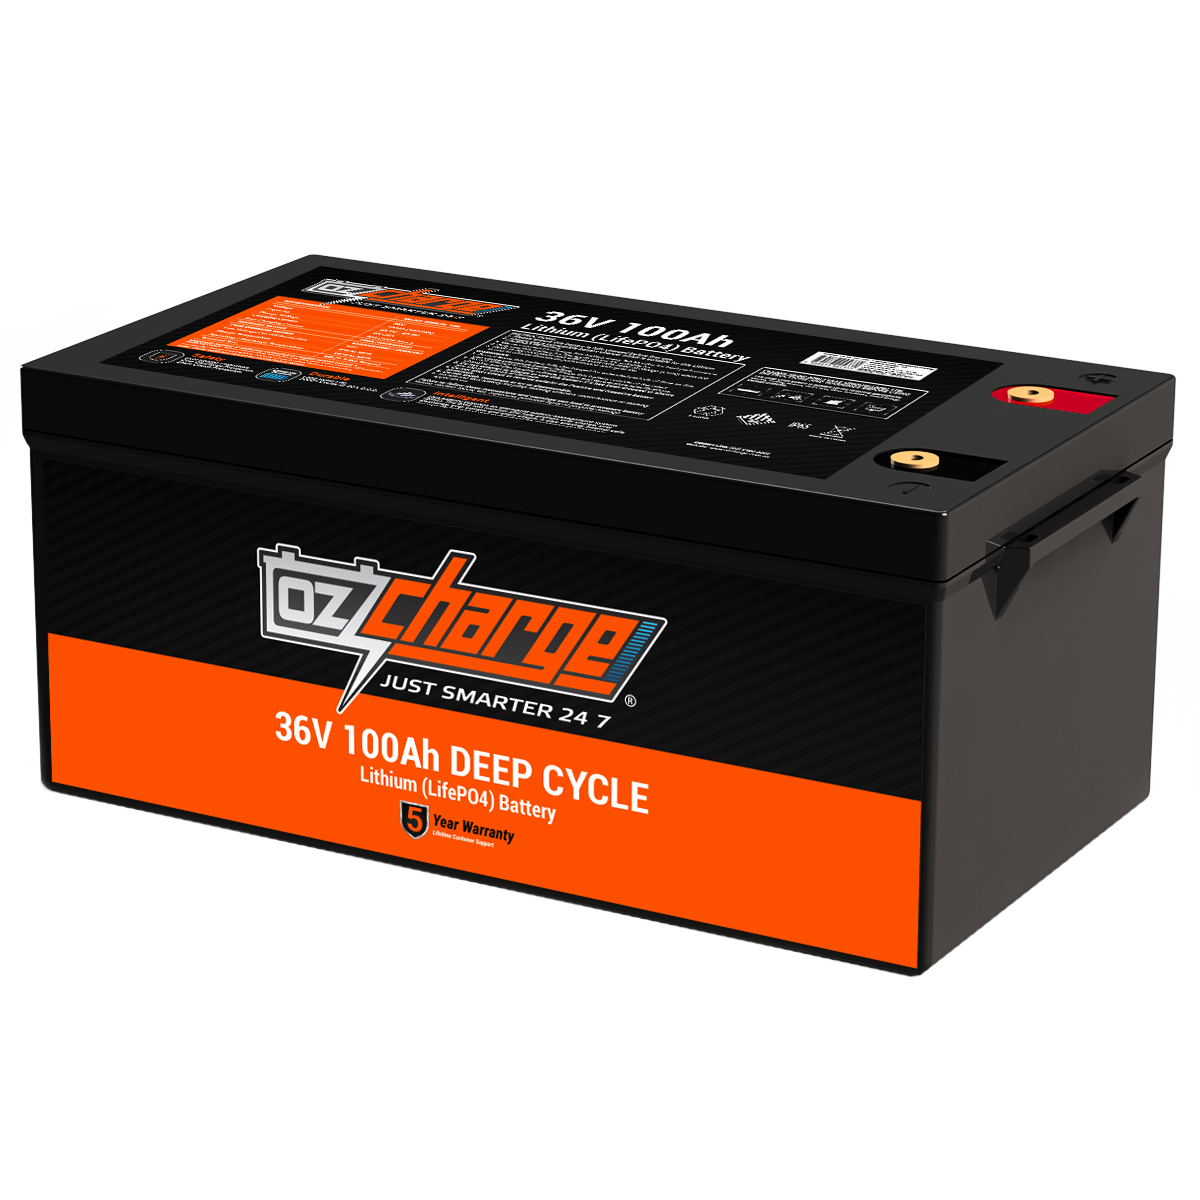 36V 100Ah Lithium LifePO4 Deep Cycle Battery – OzCharge